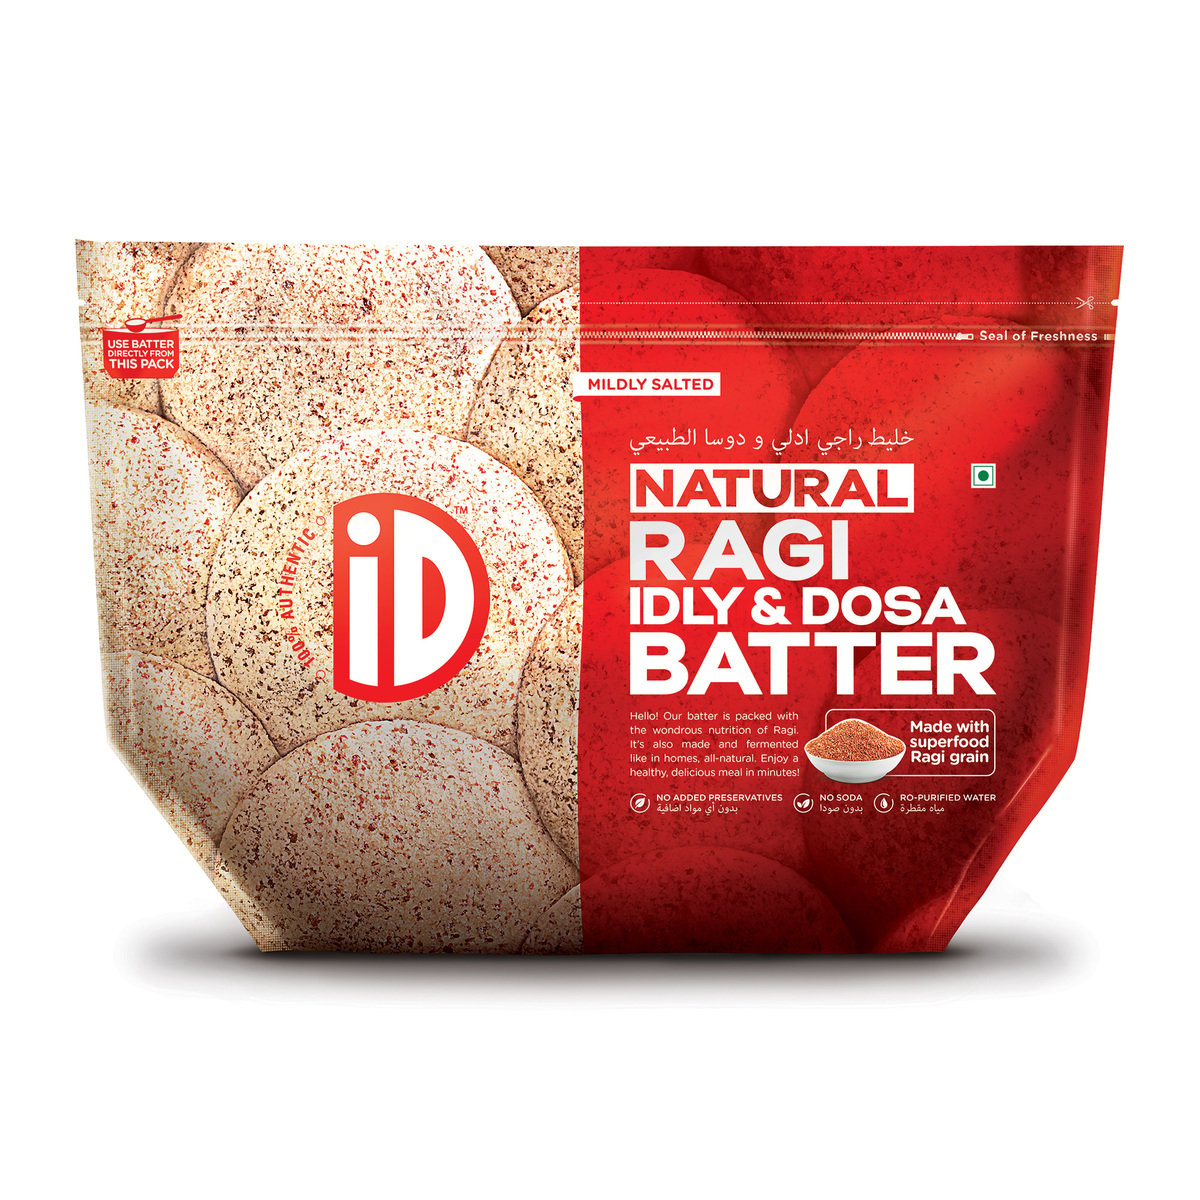 ID Natural Ragi Idly& Dosa Batter 1 kg